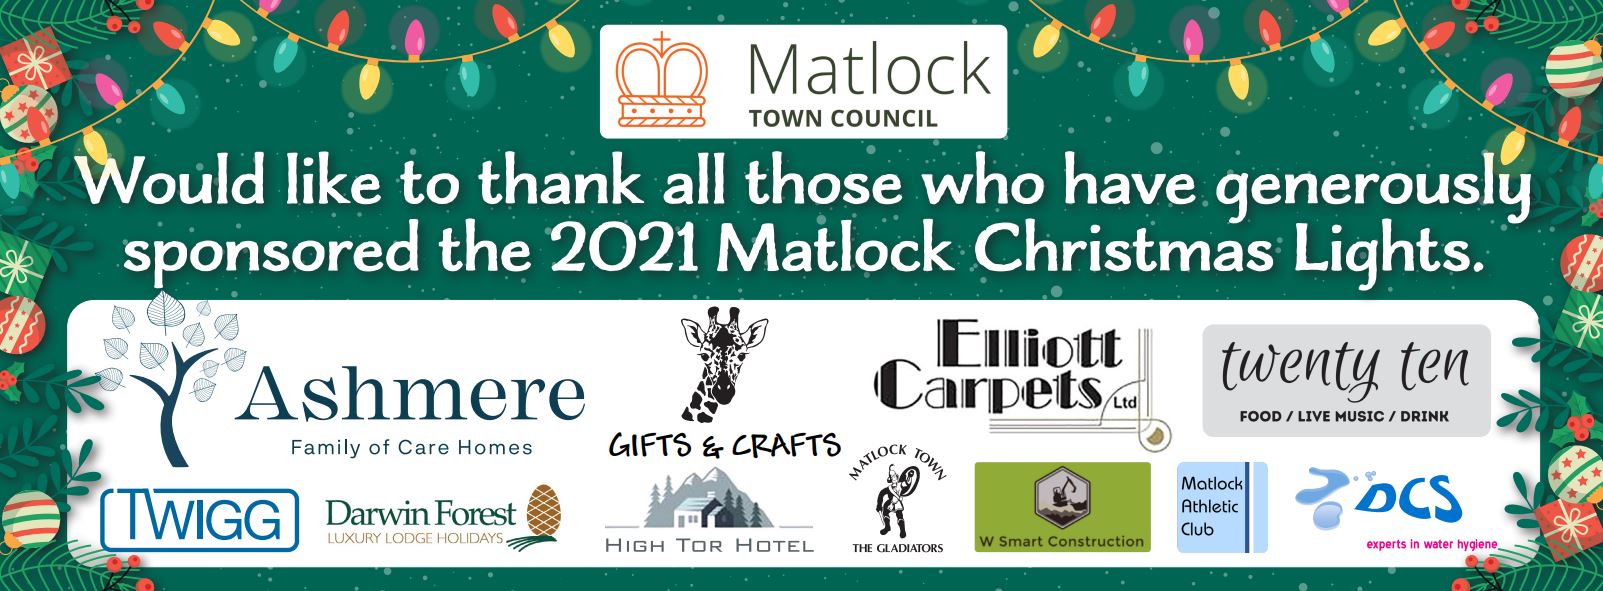 MATLOCK CHRISTMAS LIGHTS SPONSORSHIP Matlock Town Council